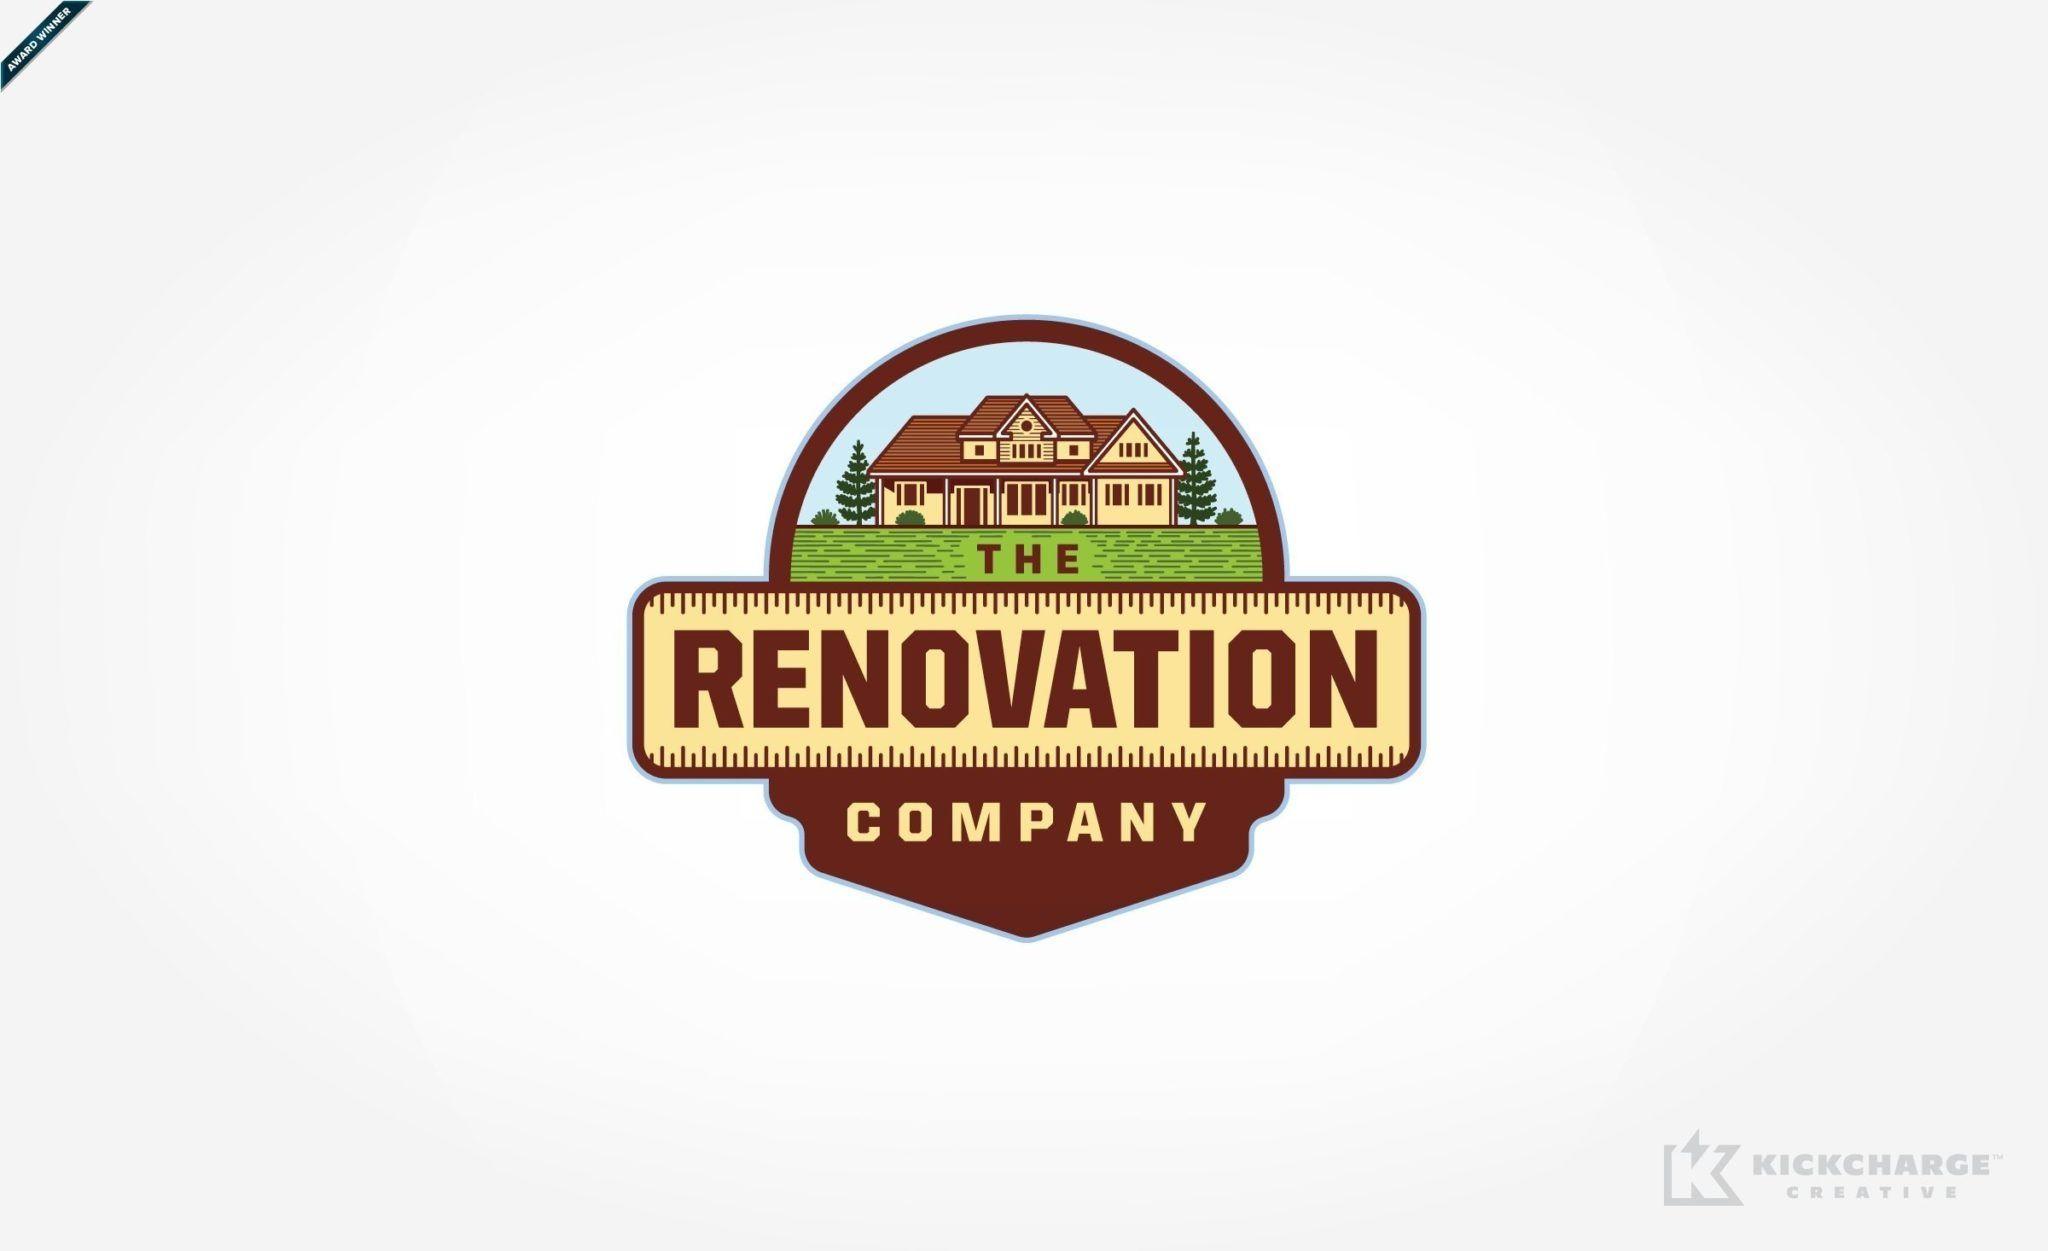 Renovation Company Logo - The Renovation Company Creative. kickcharge.com